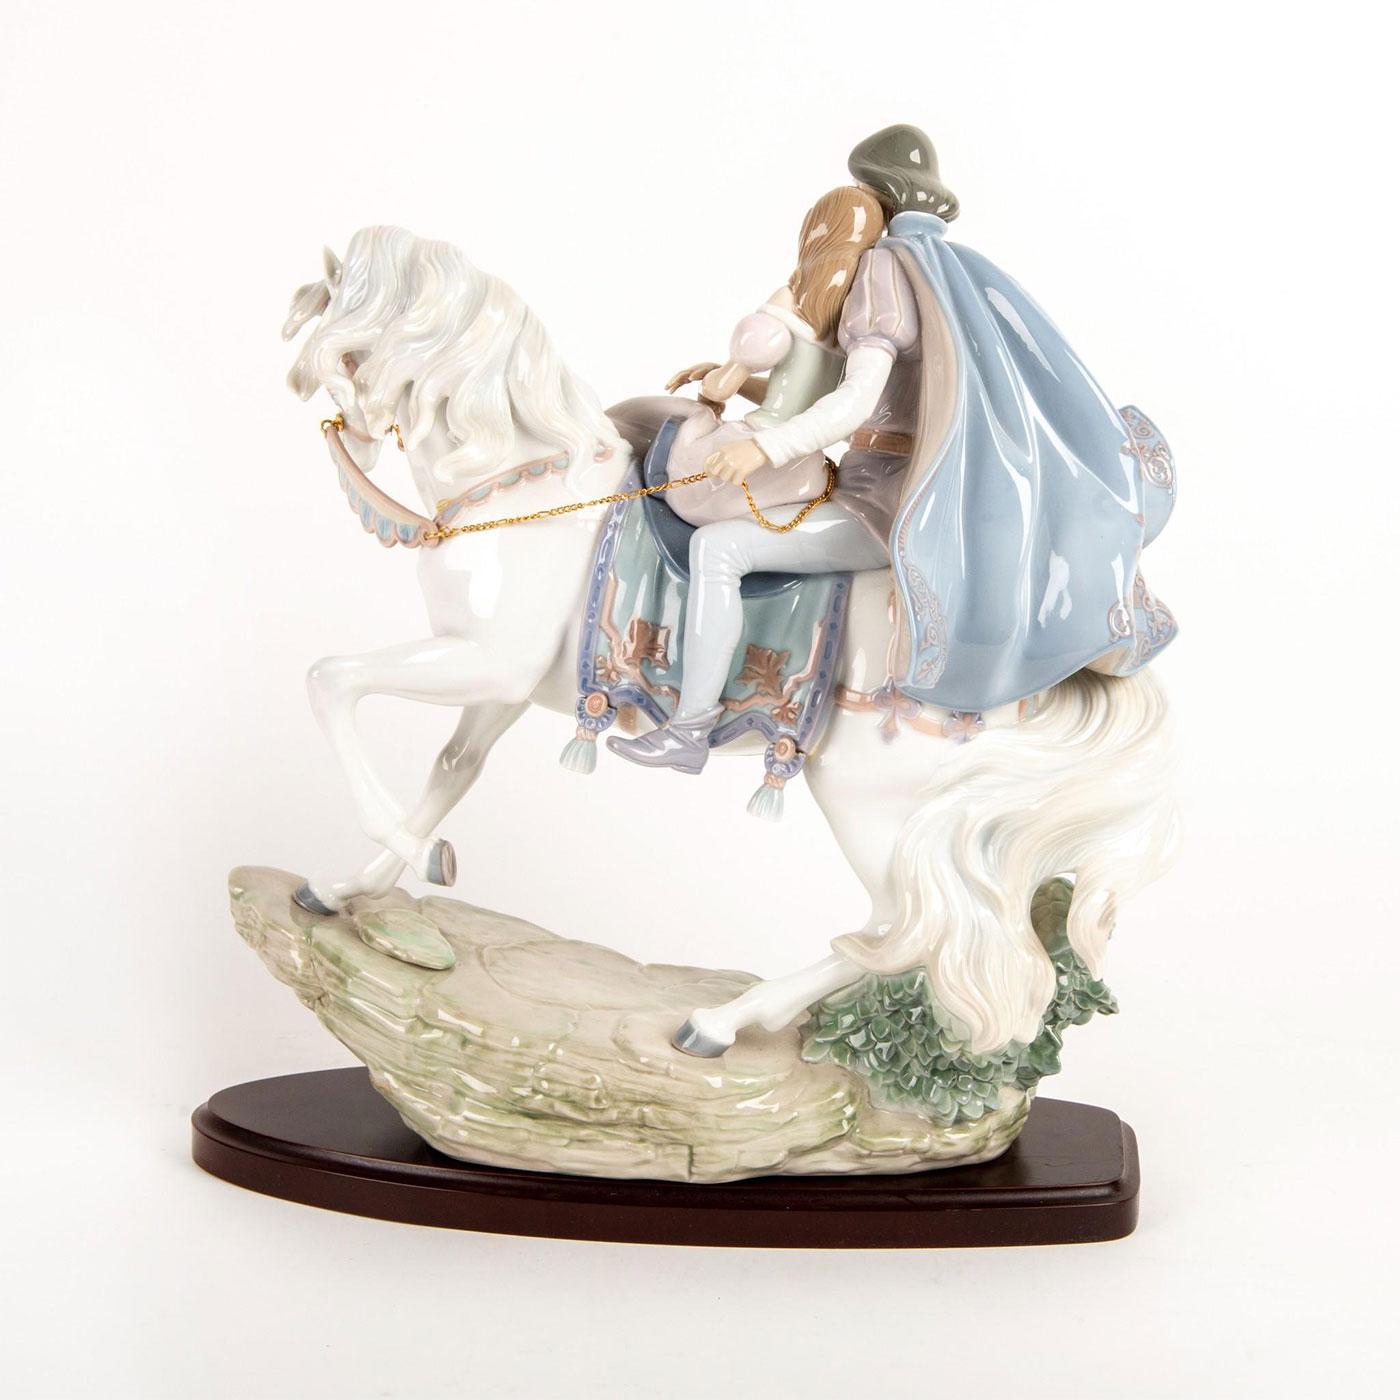 Sold at Auction: Lladro Large Porcelain Sculpture ONWARD! 1001742